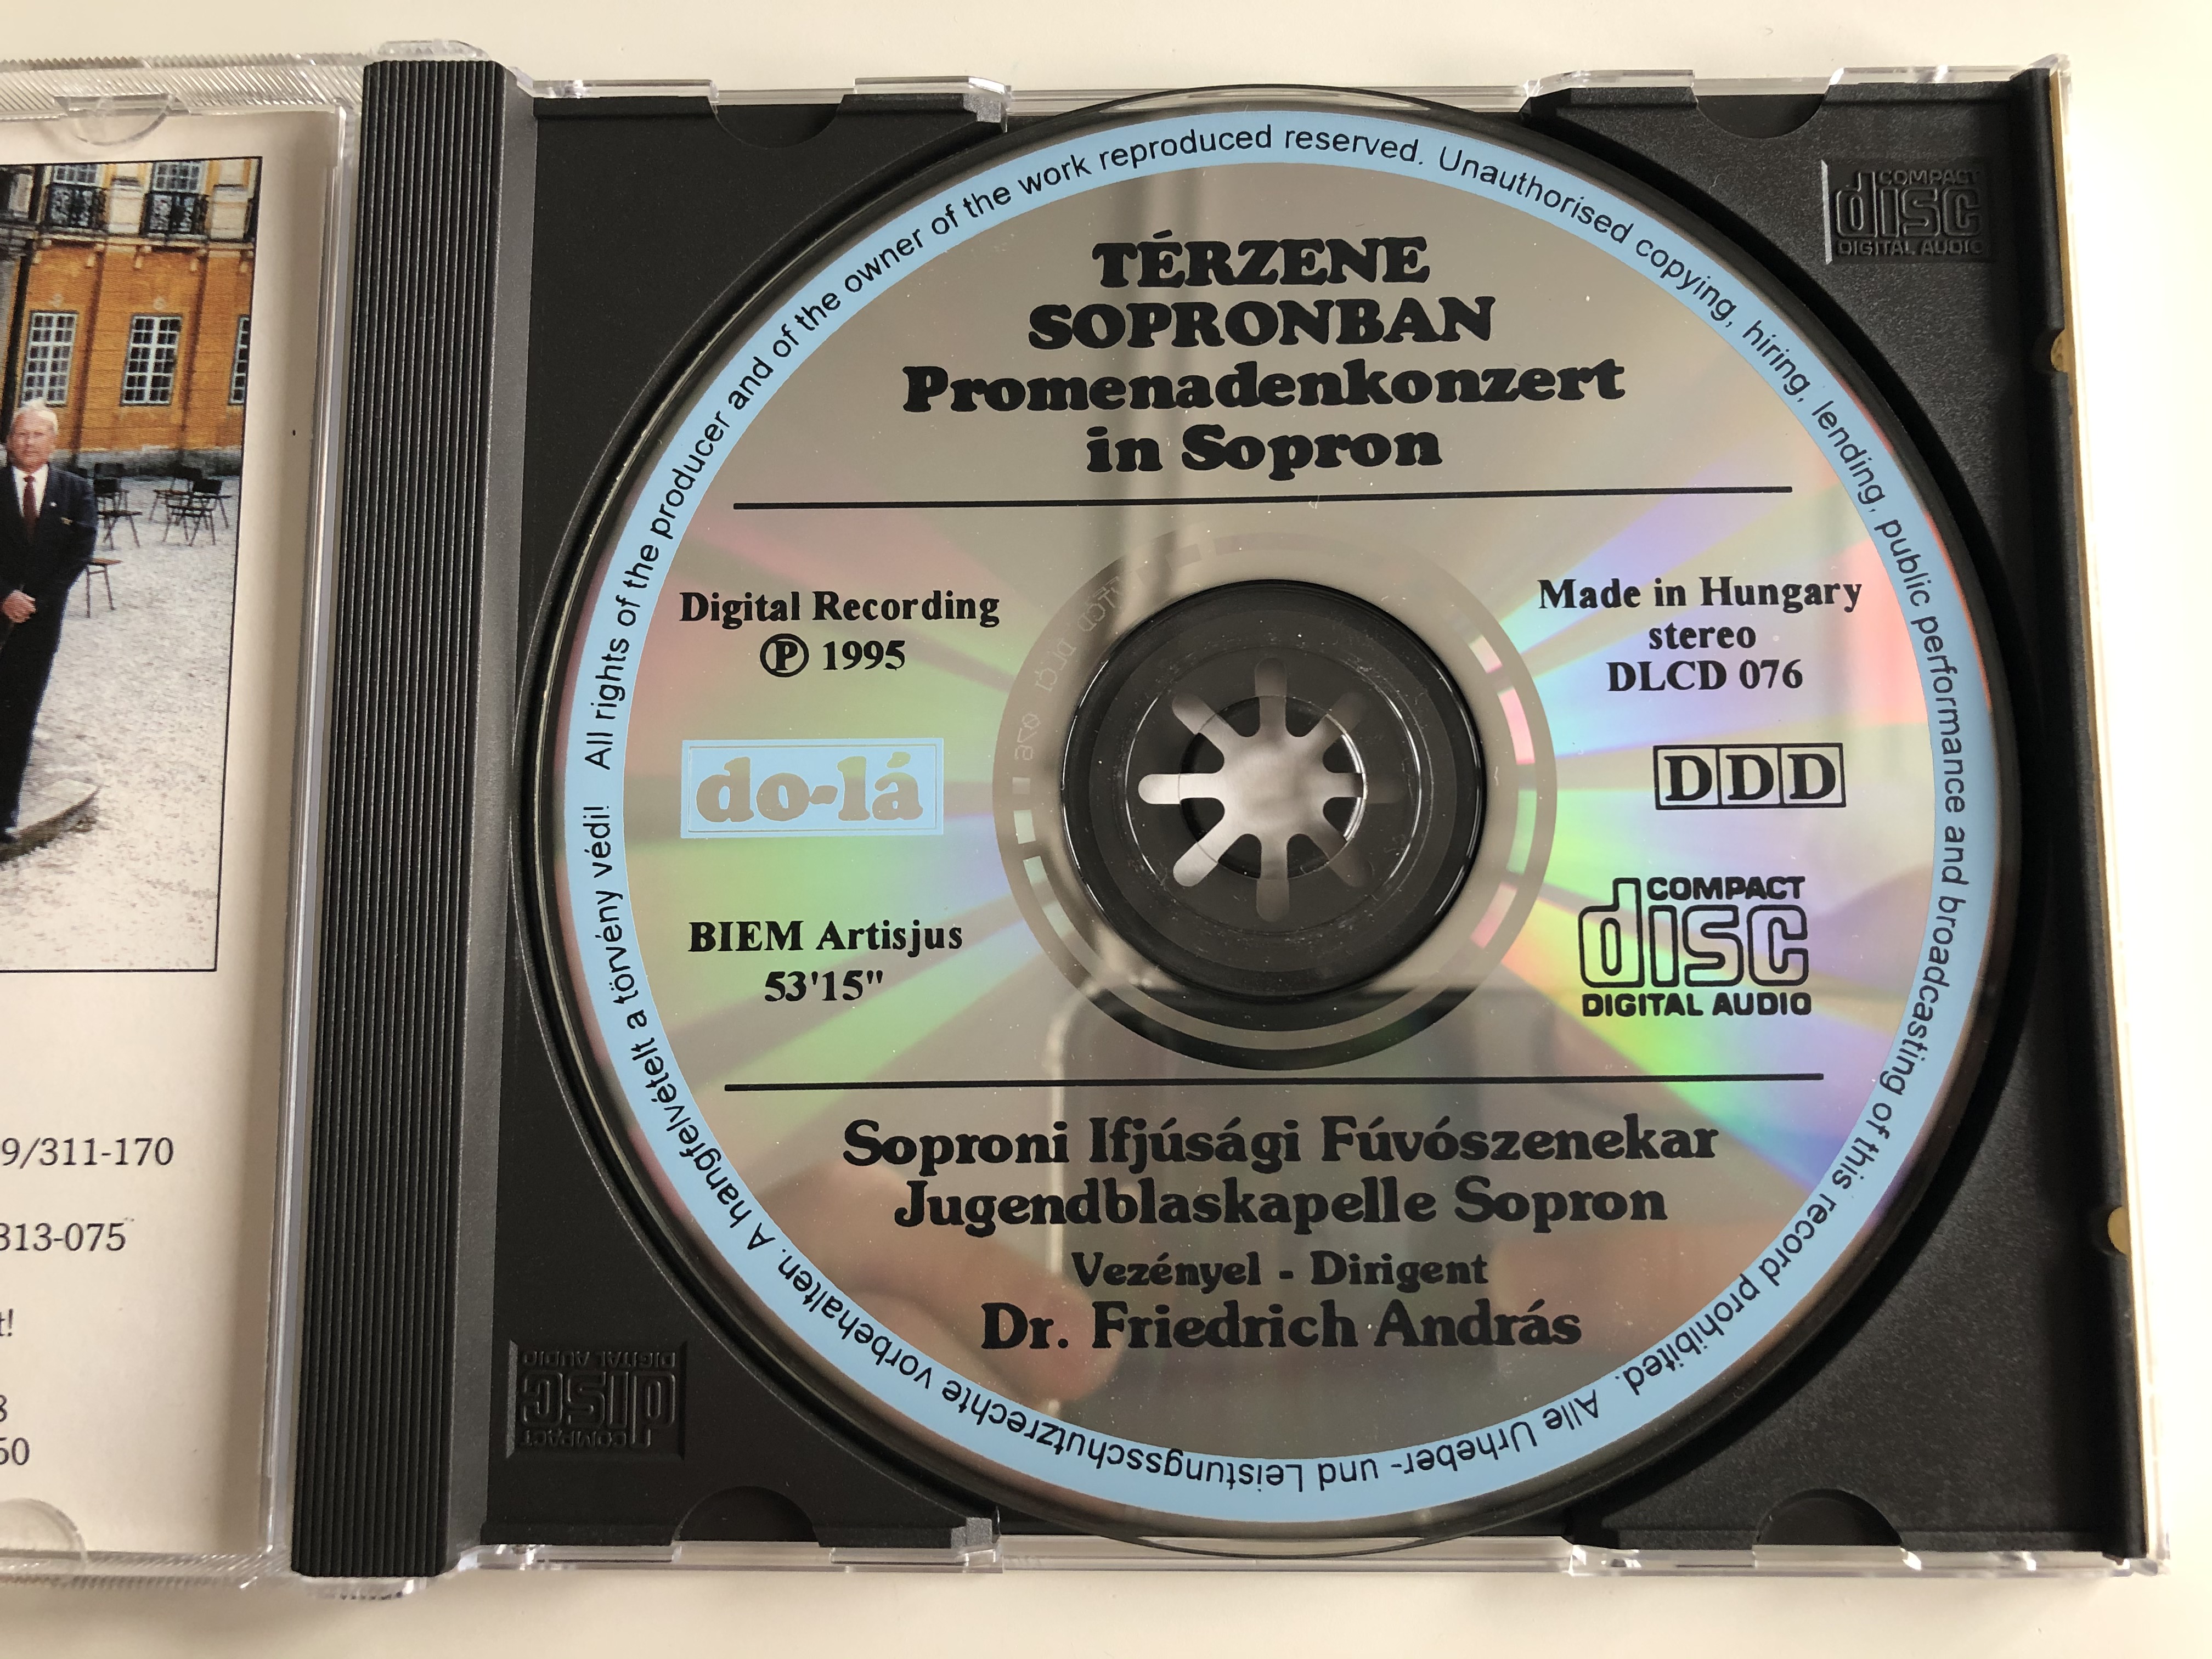 terzene-sopronban-promenadenkonzert-in-sopron-a-soproni-ifjusagi-fuvostenekar-conducted-dr.-friendrich-andras-jugendblaskapelle-sopron-audio-cd-1995-stereo-dlcd-076-7-.jpg